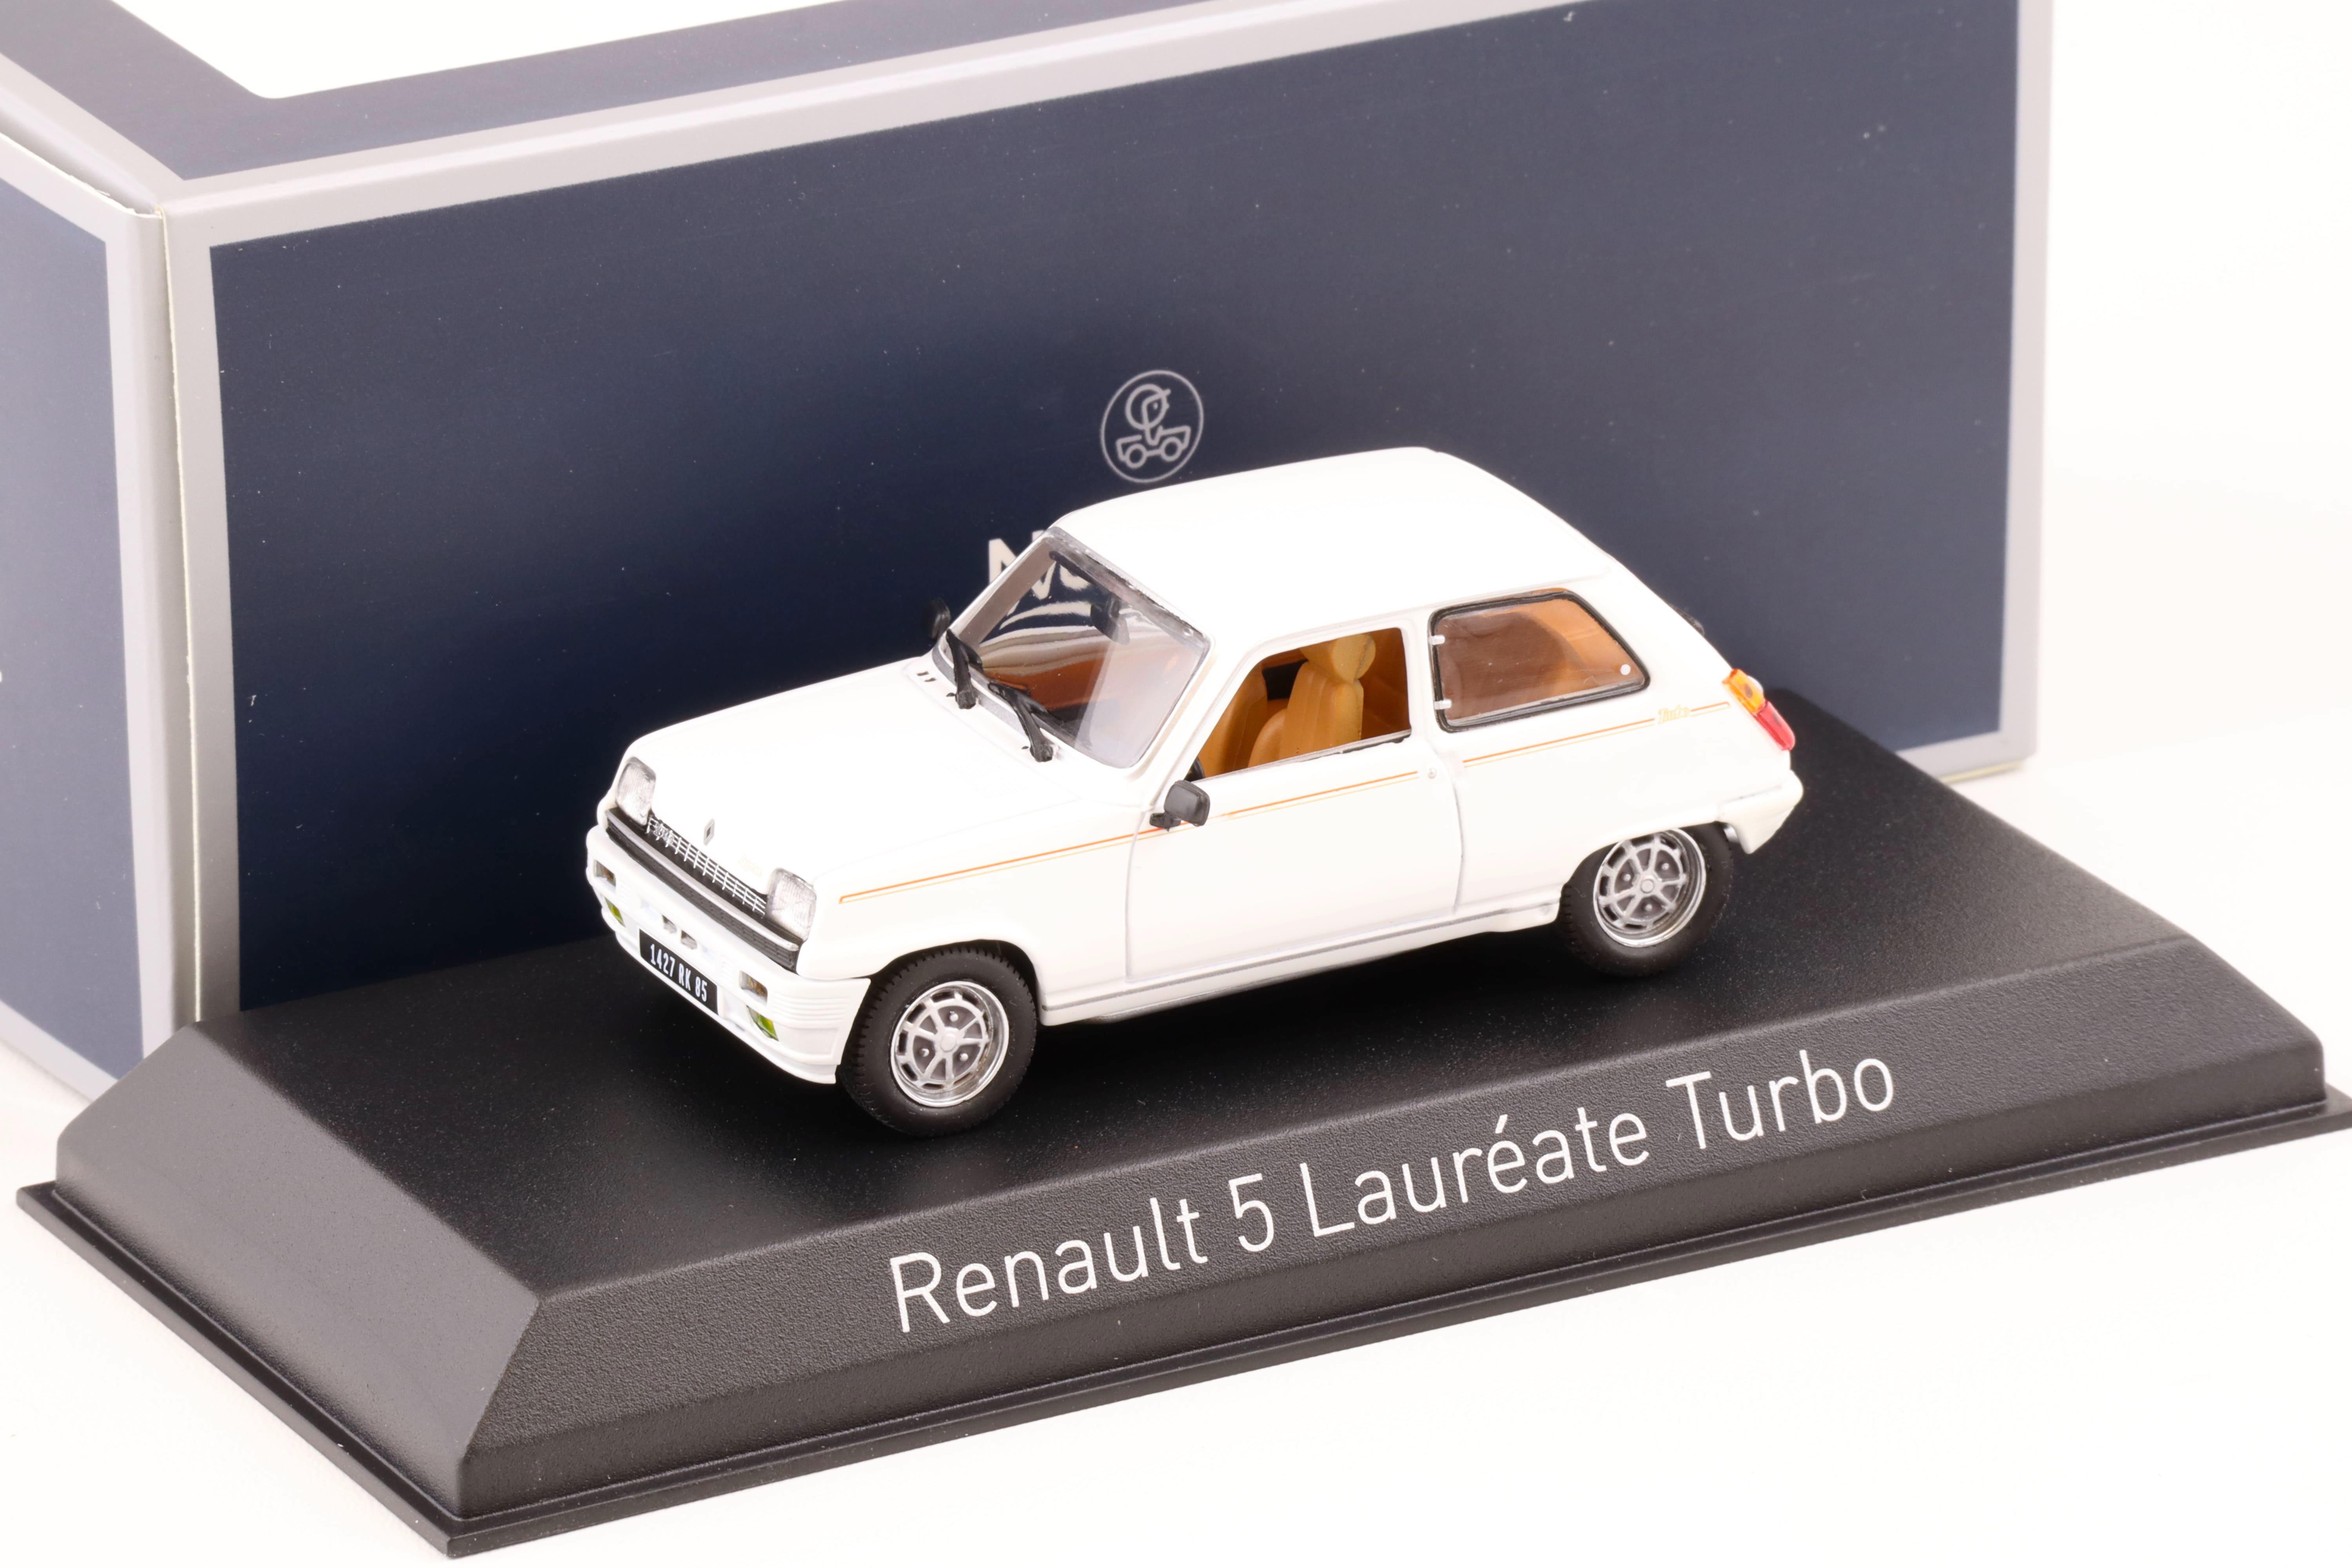 1:43 Norev Renault 5 Laureate Turbo 1985 white 510513